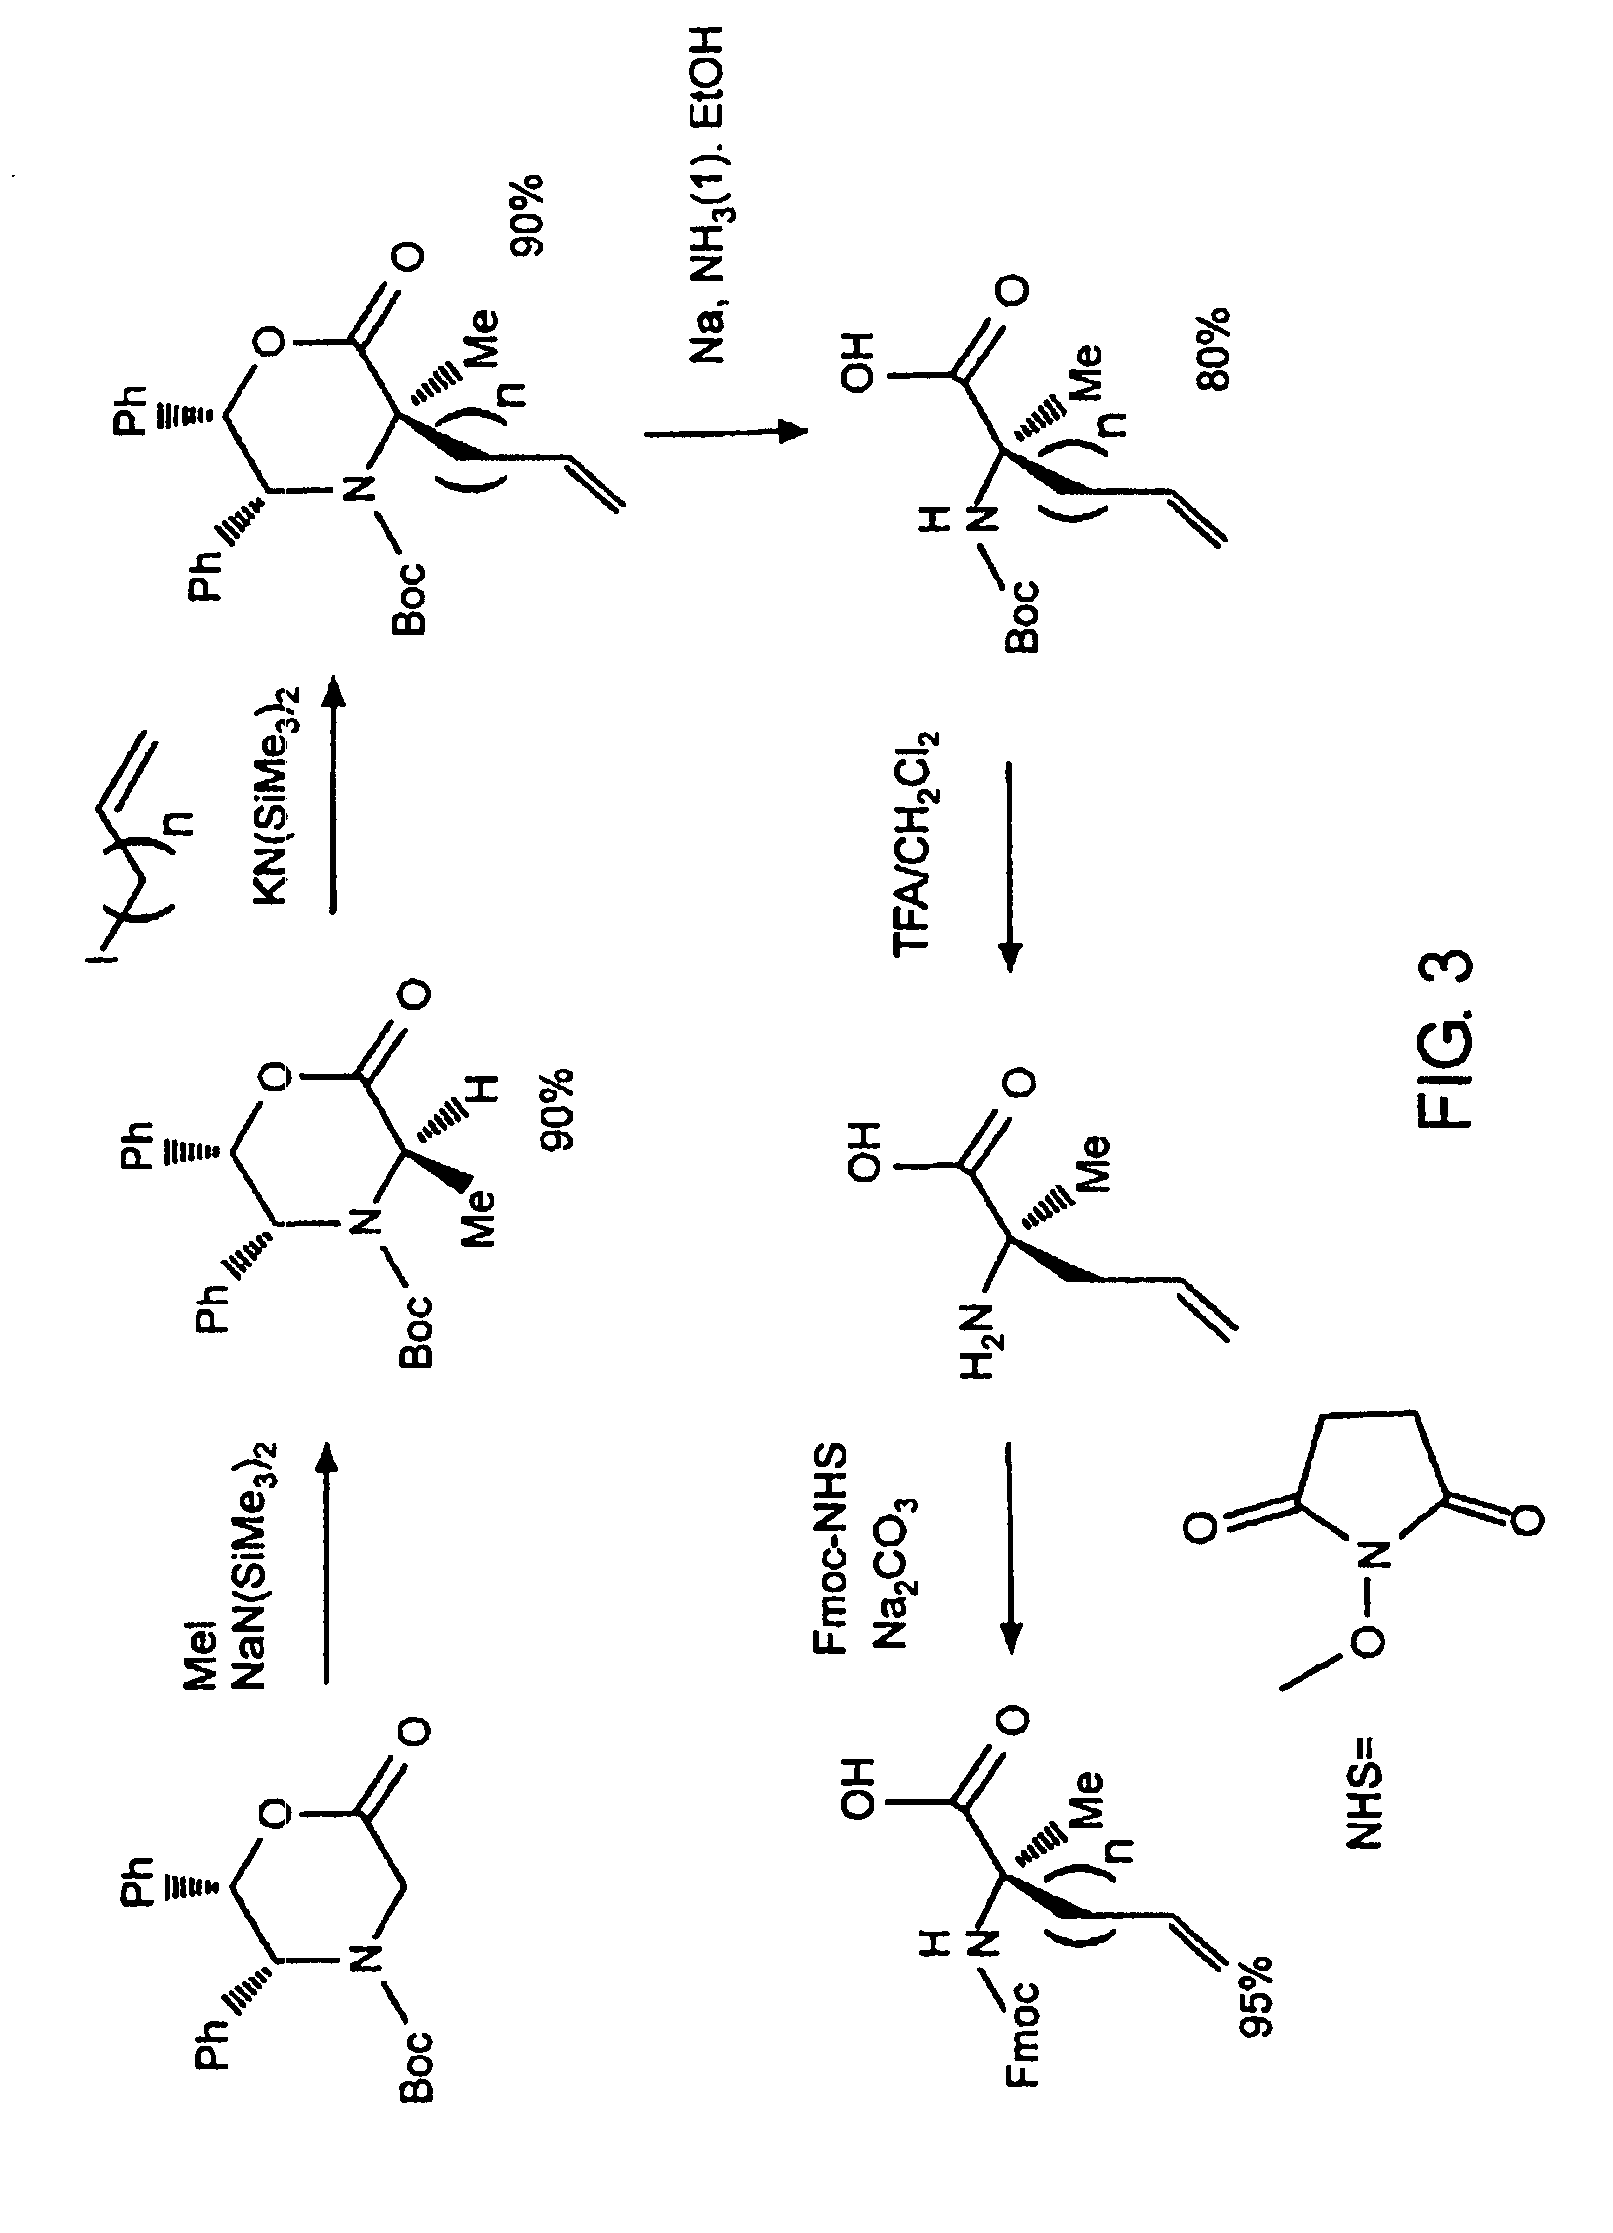 Stabilized compounds having secondary structure motifs